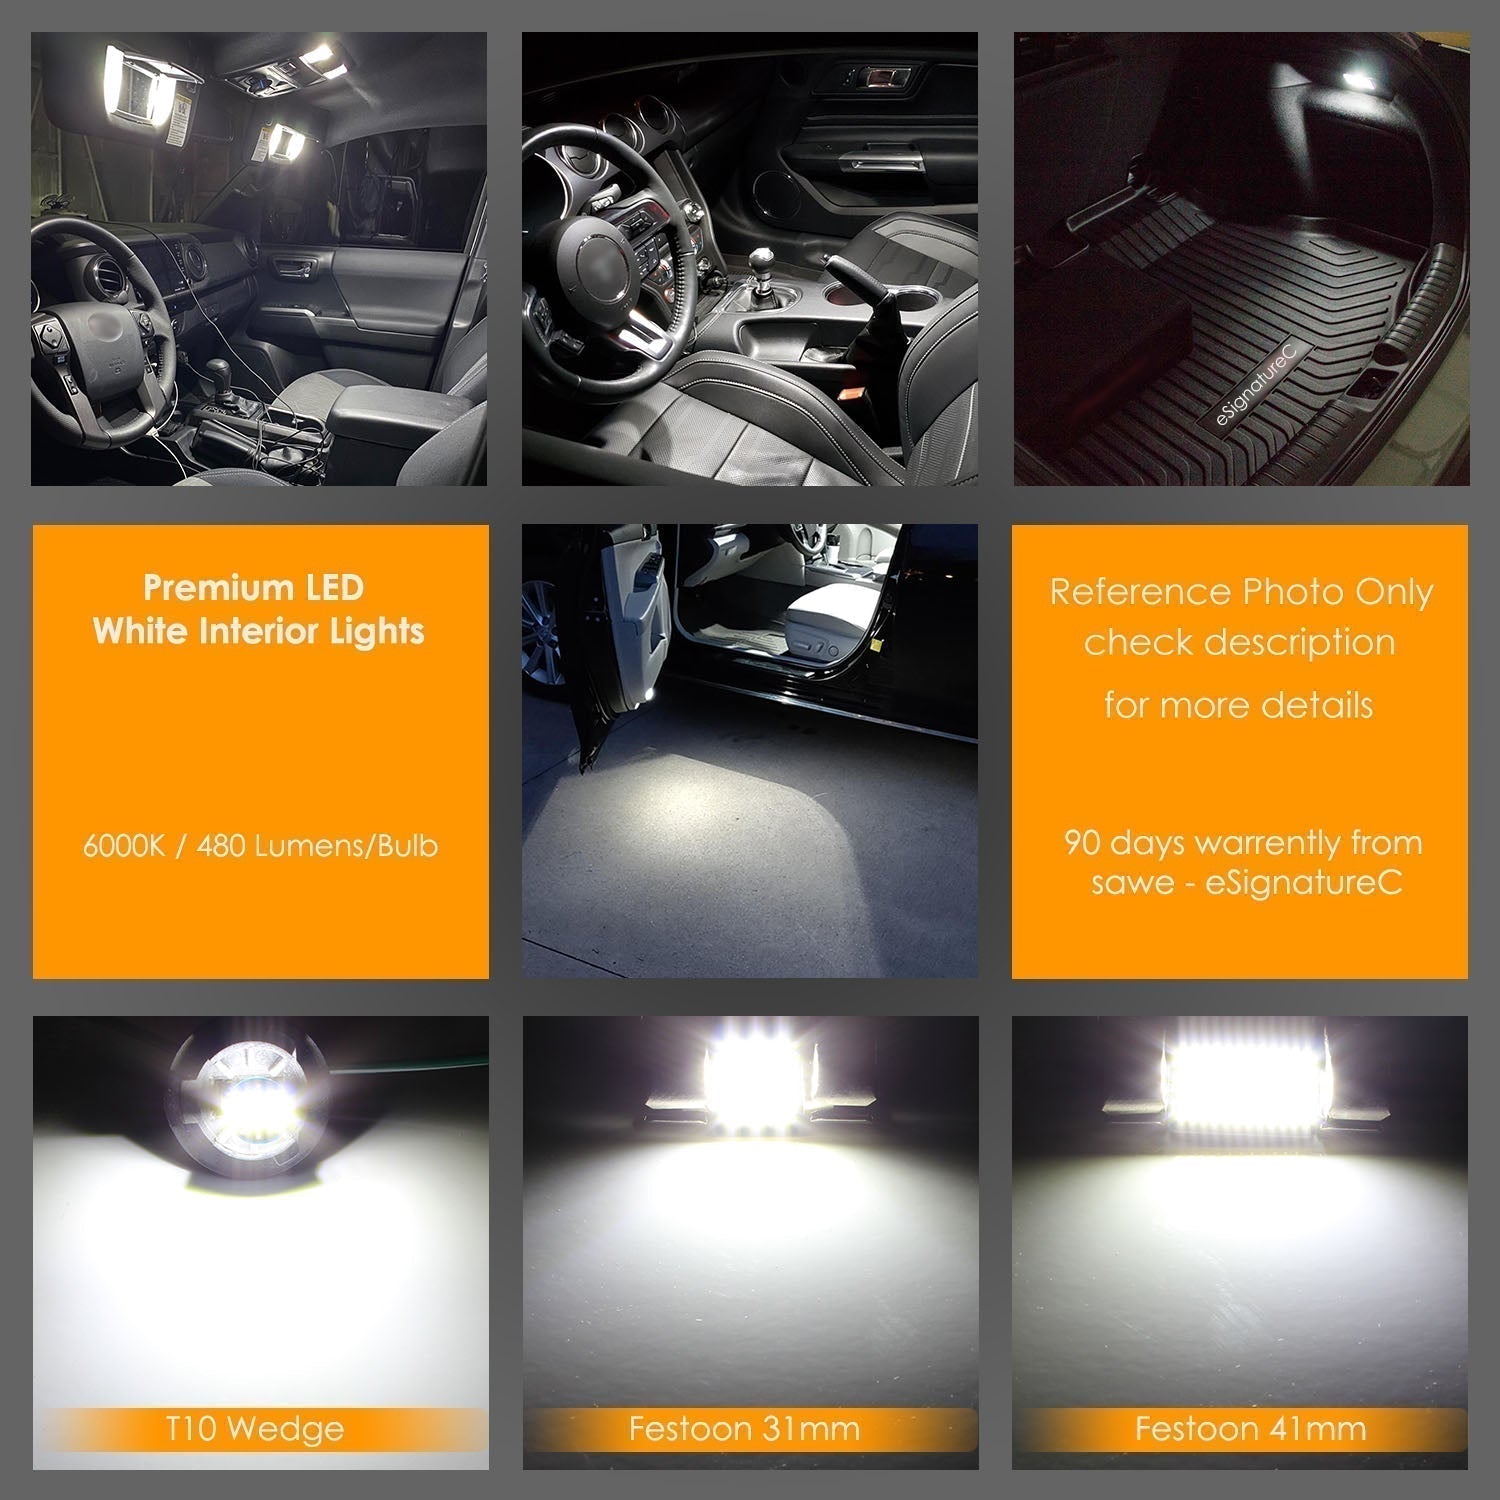 For Acura RL Interior LED Lights - Dome & Map Light Bulbs Package Kit for 1999 - 2004 - White